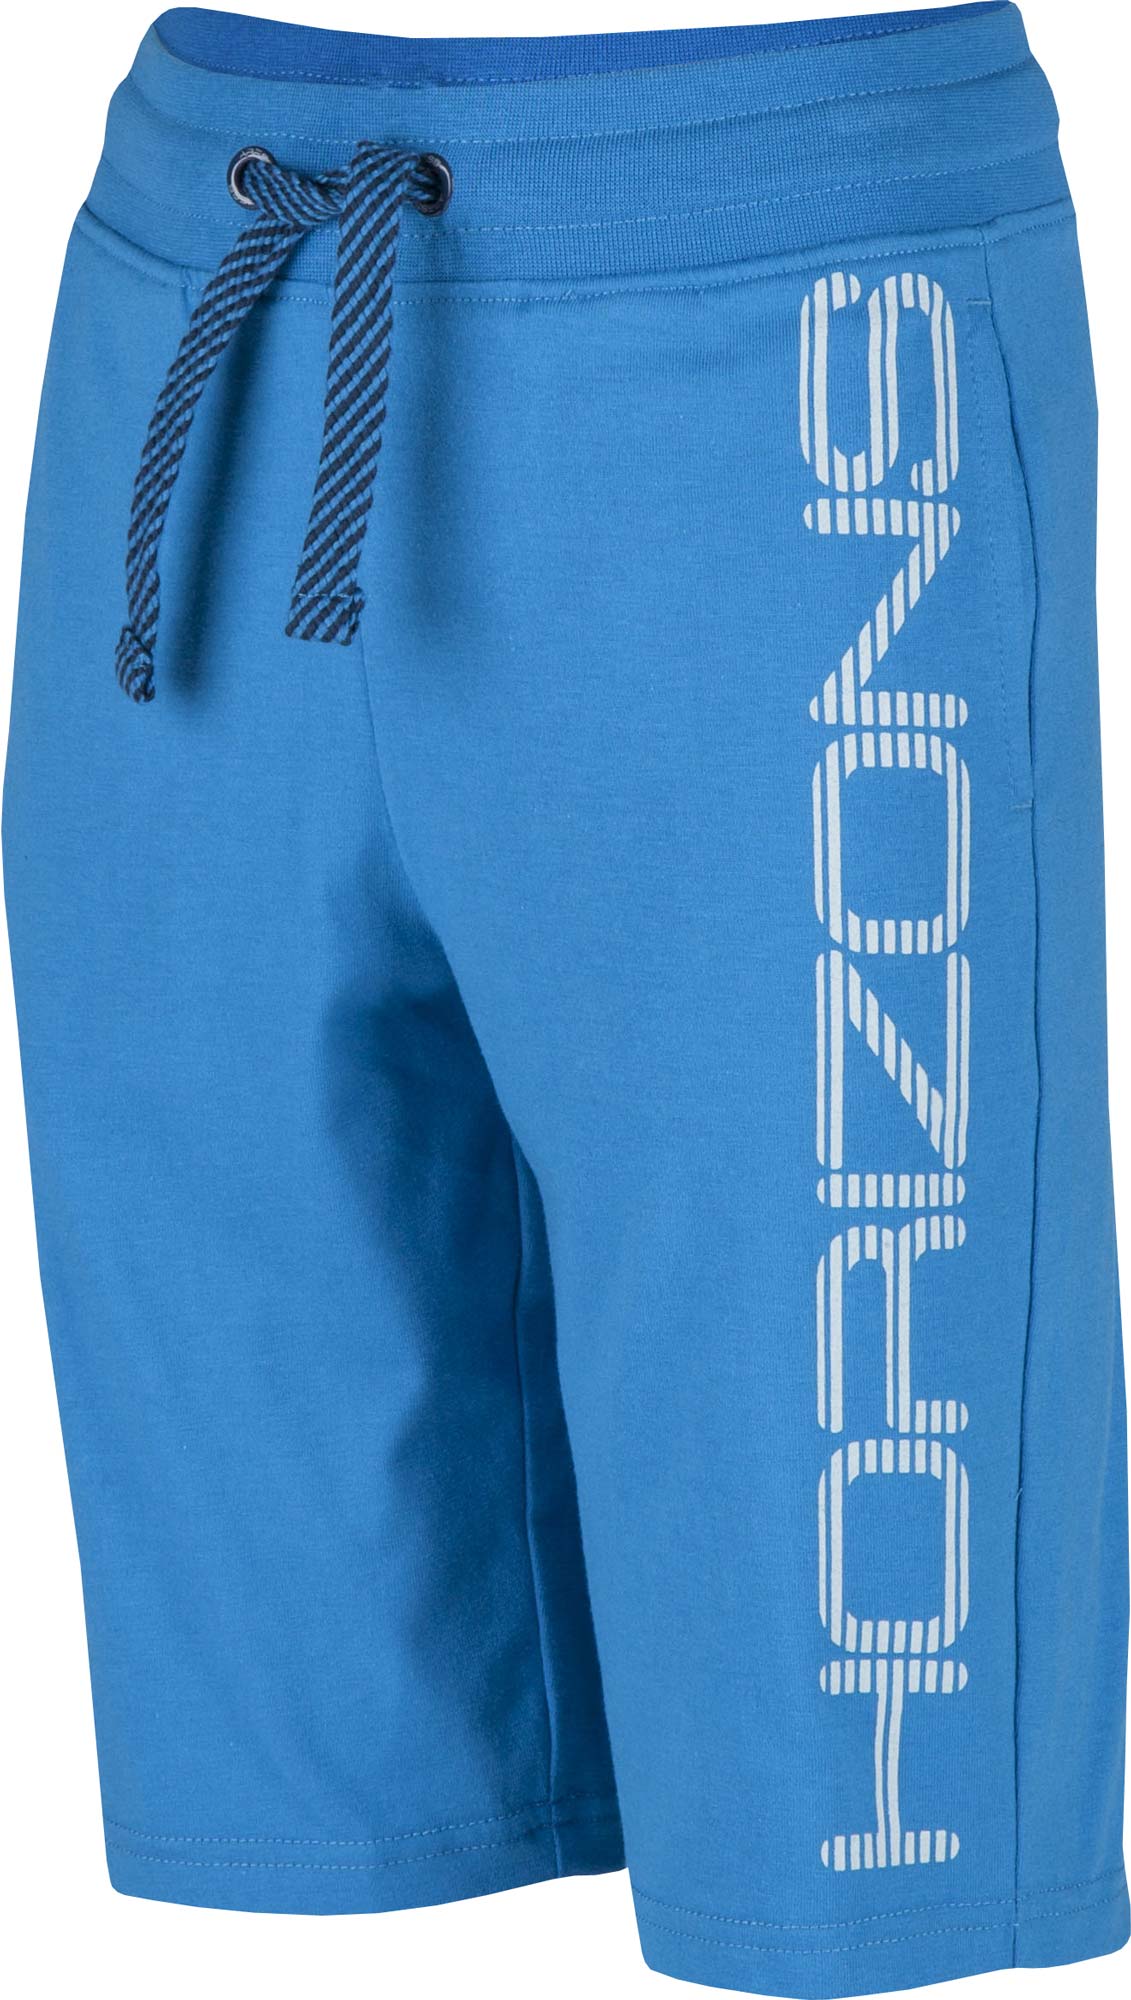 Boys’ sports shorts